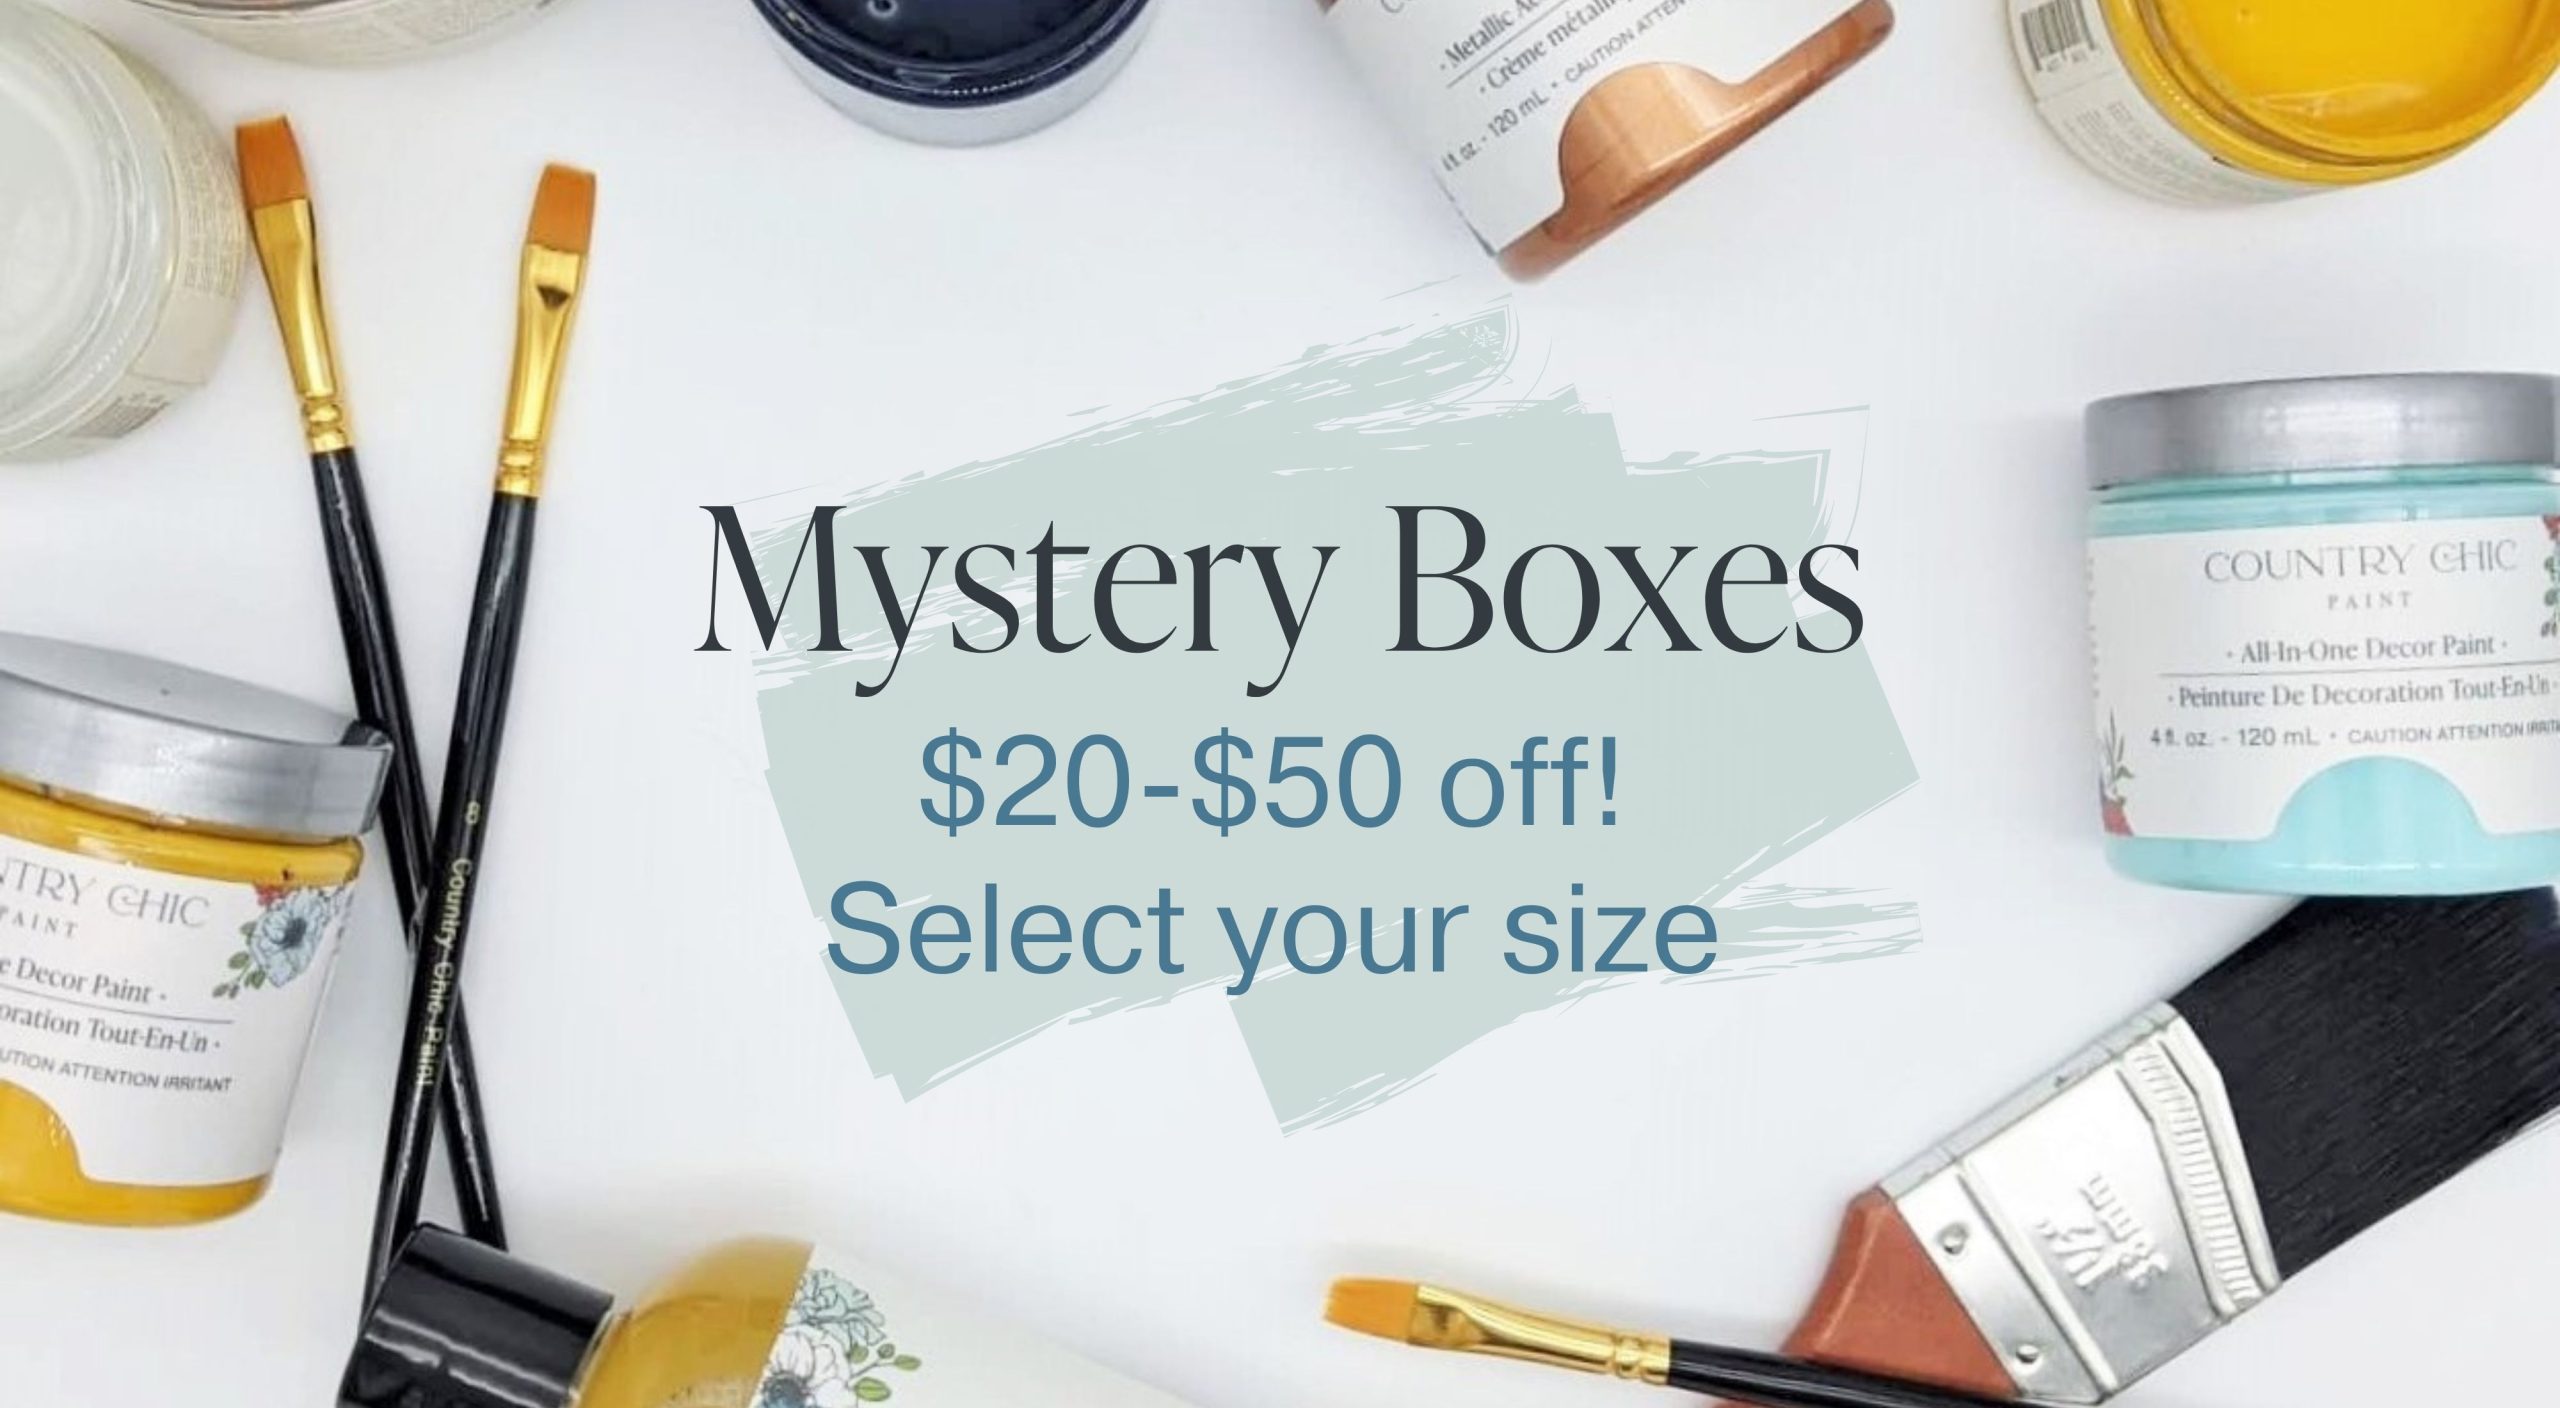 Mystery box sale April 2022 - save $20-$50